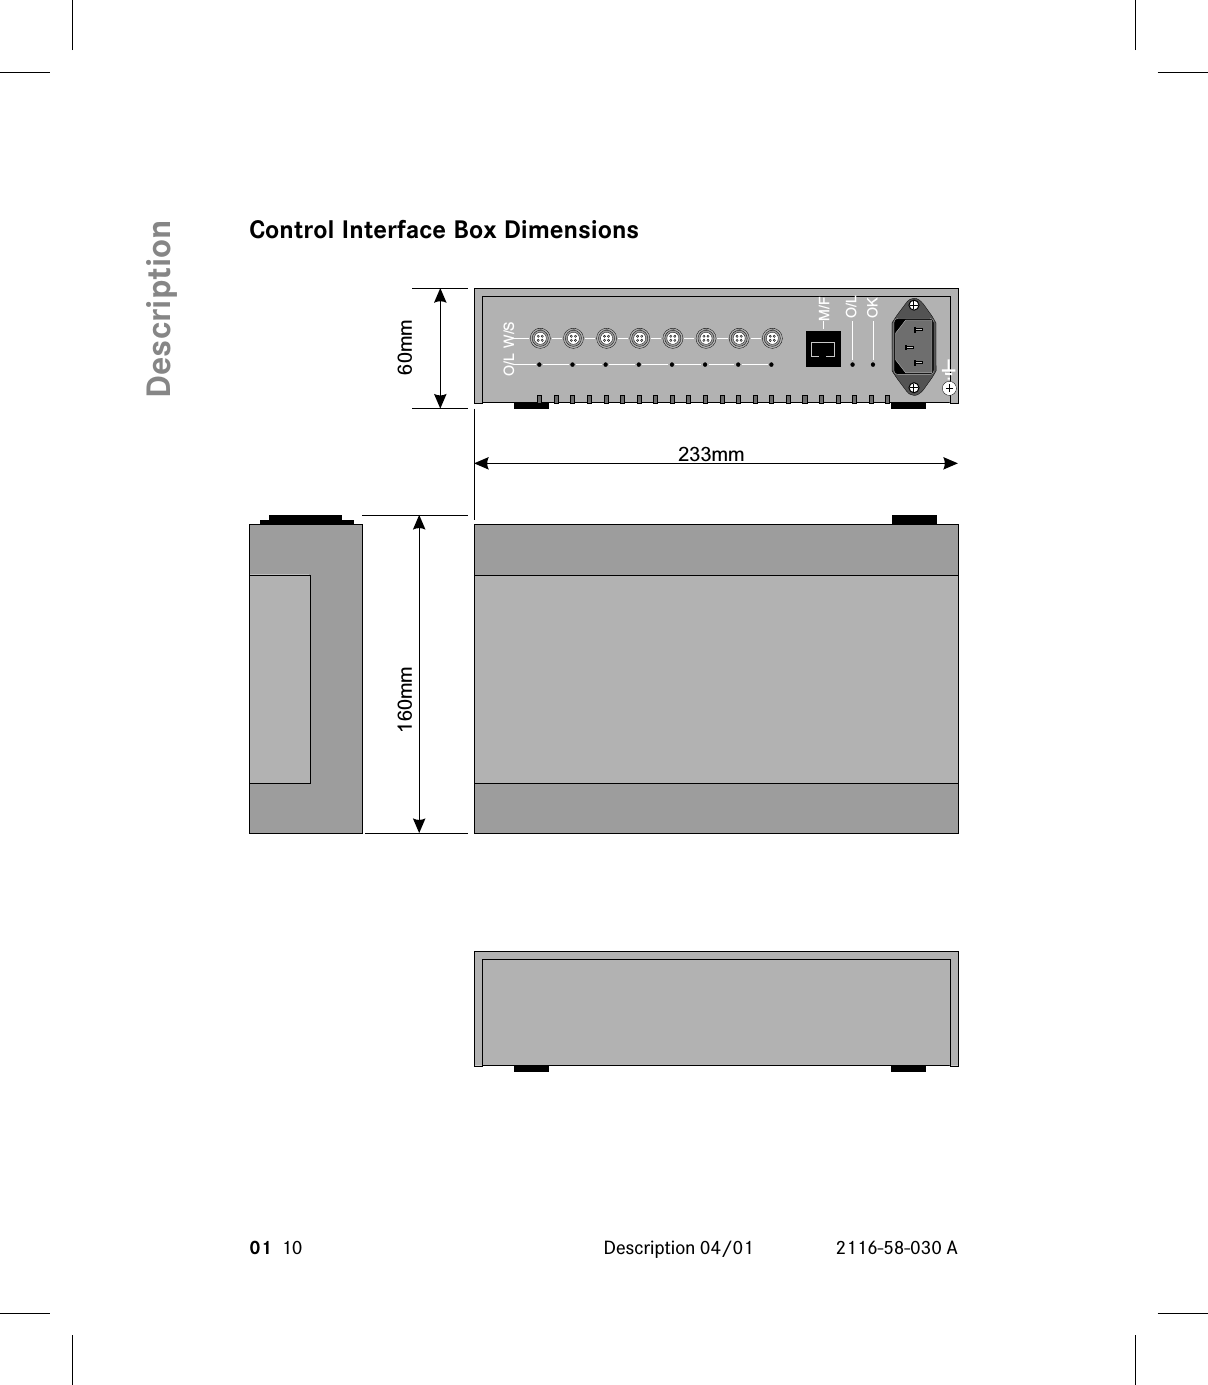 Control Interface Box Dimensions01 10 Description 04/01 2116-58-030 ADescriptionM/FO/LOKO/L W/S60mm233mm160mm